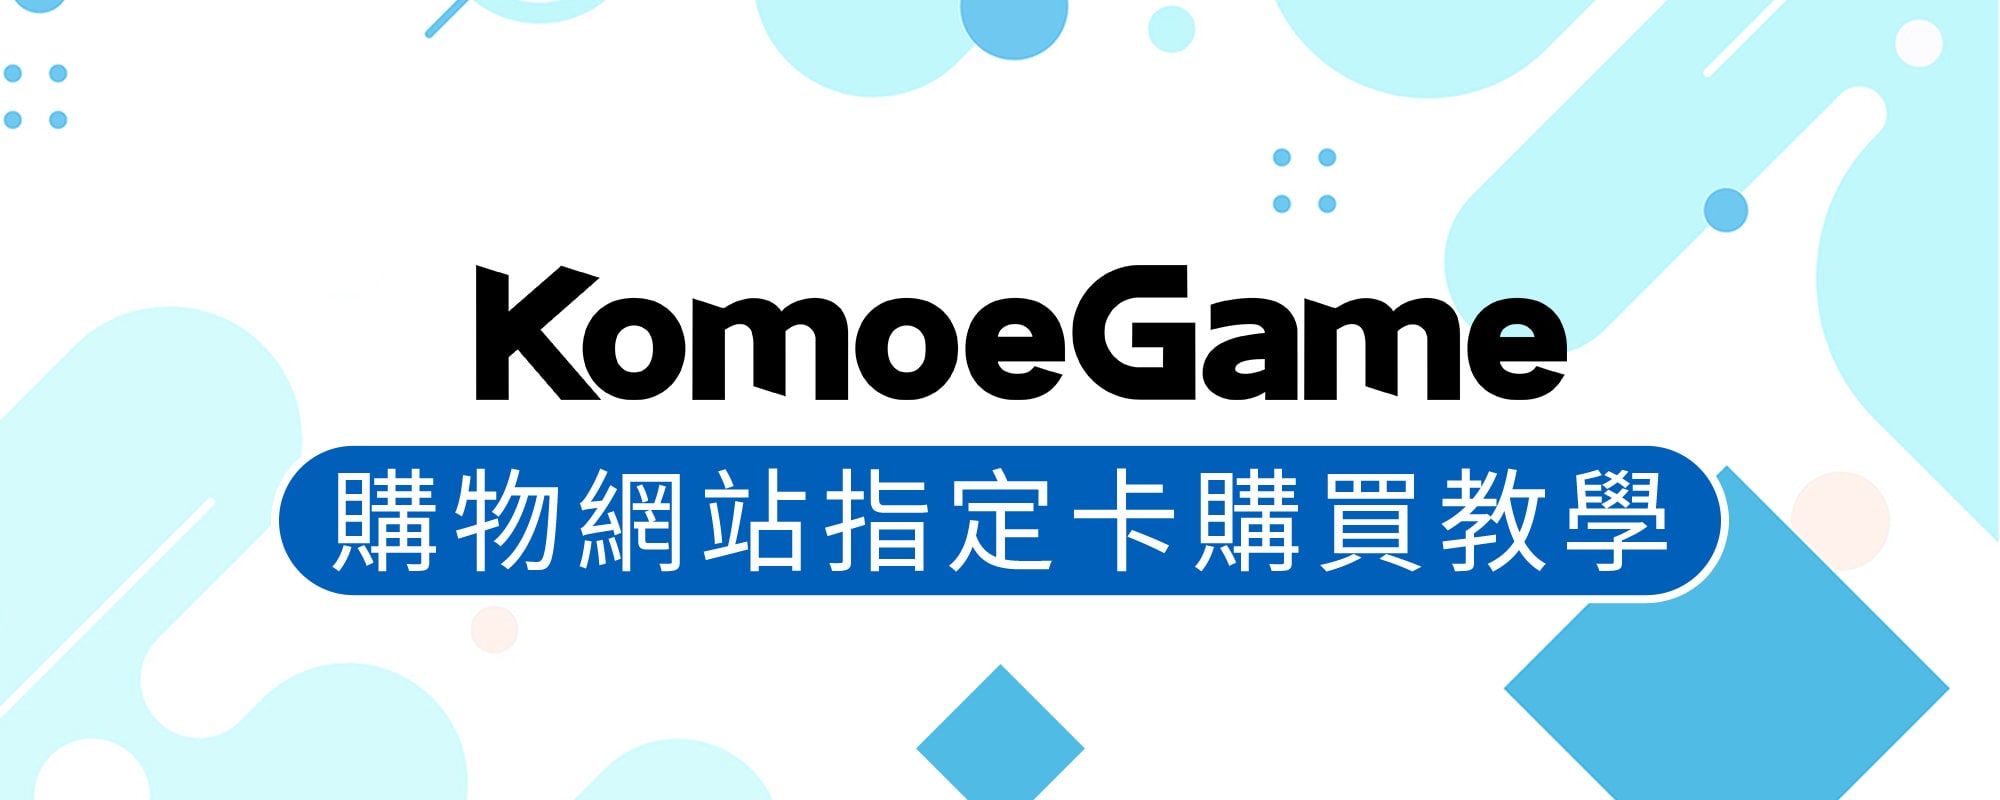   KOMOE GAME儲值 – 購物網站